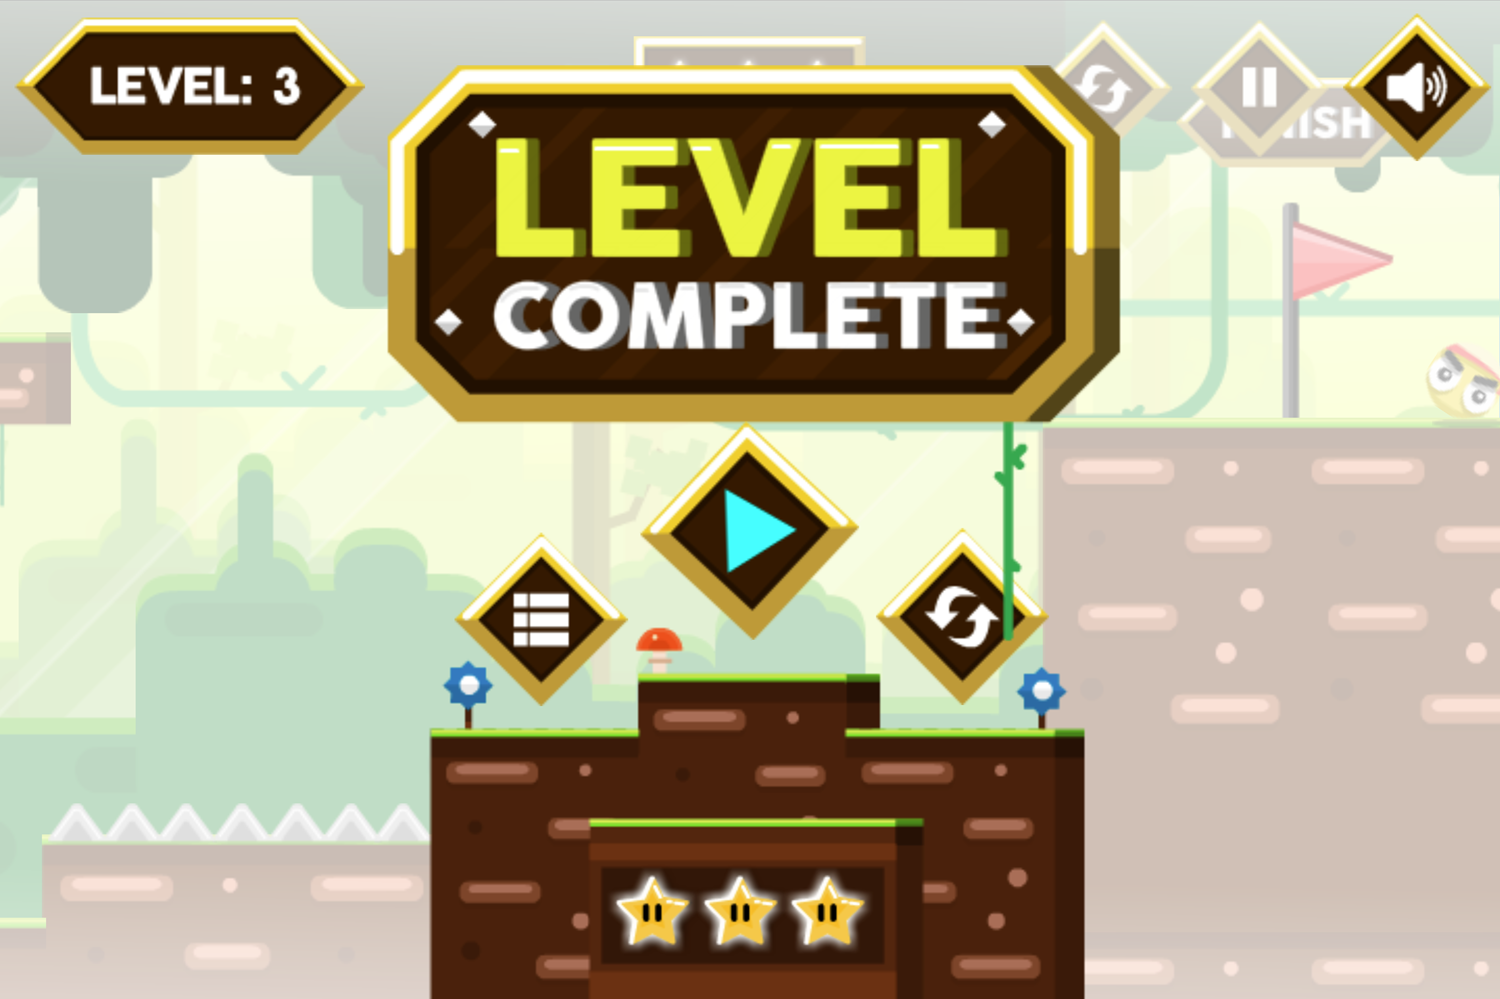 Yellow Ball Adventure Game Level Complete Screen Screenshot.